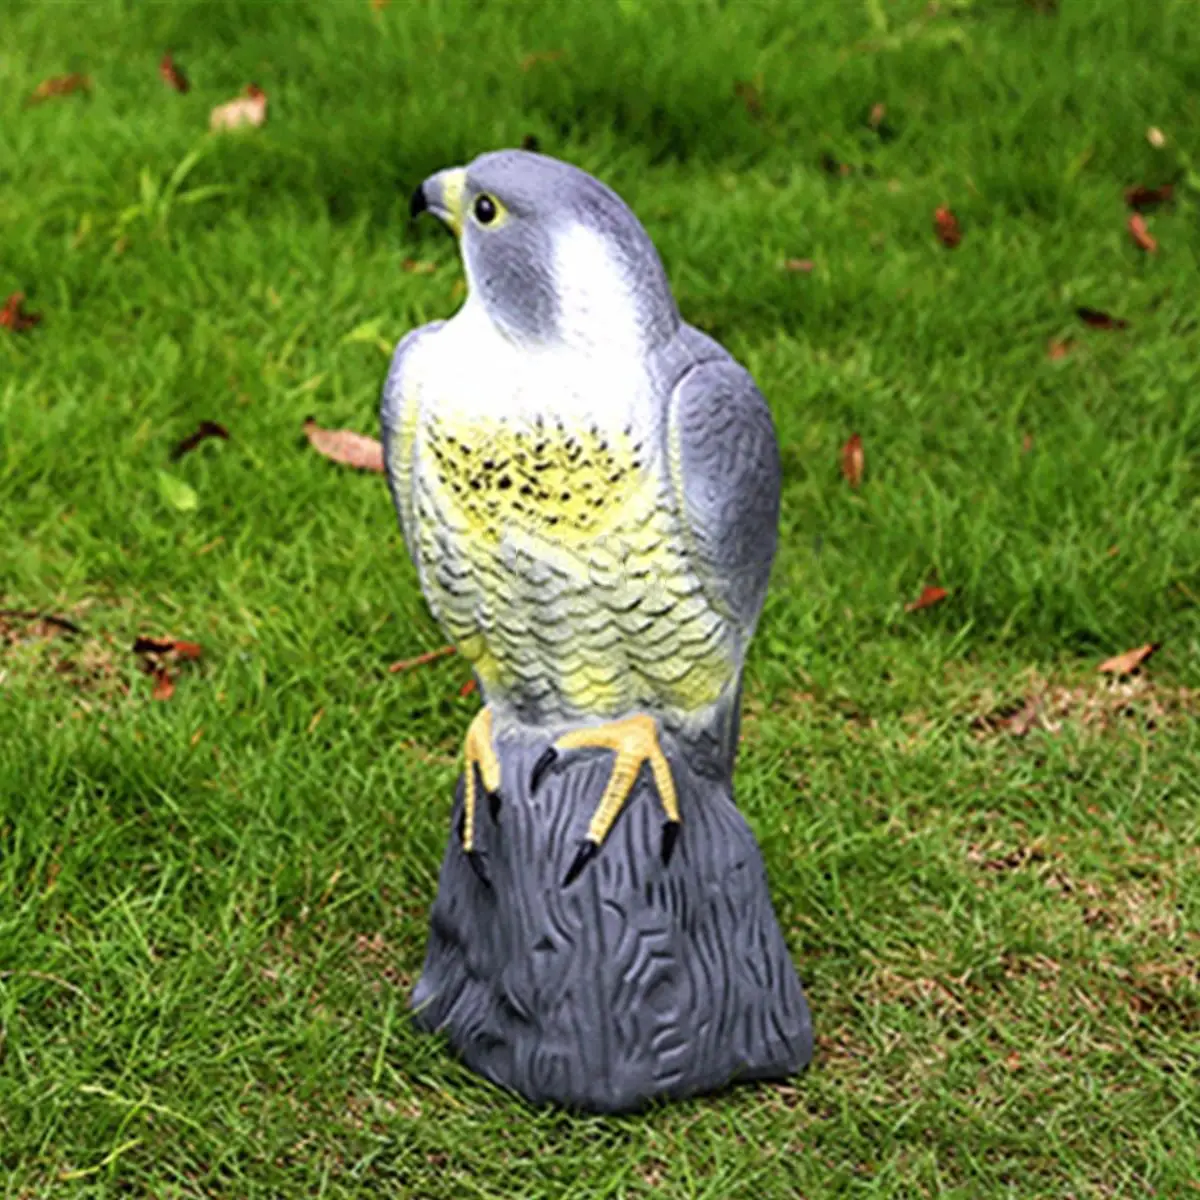 Fake Falcon Hawk Hunting Decoy Deterrent Scarer Repeller Garden Lawn Decor US 